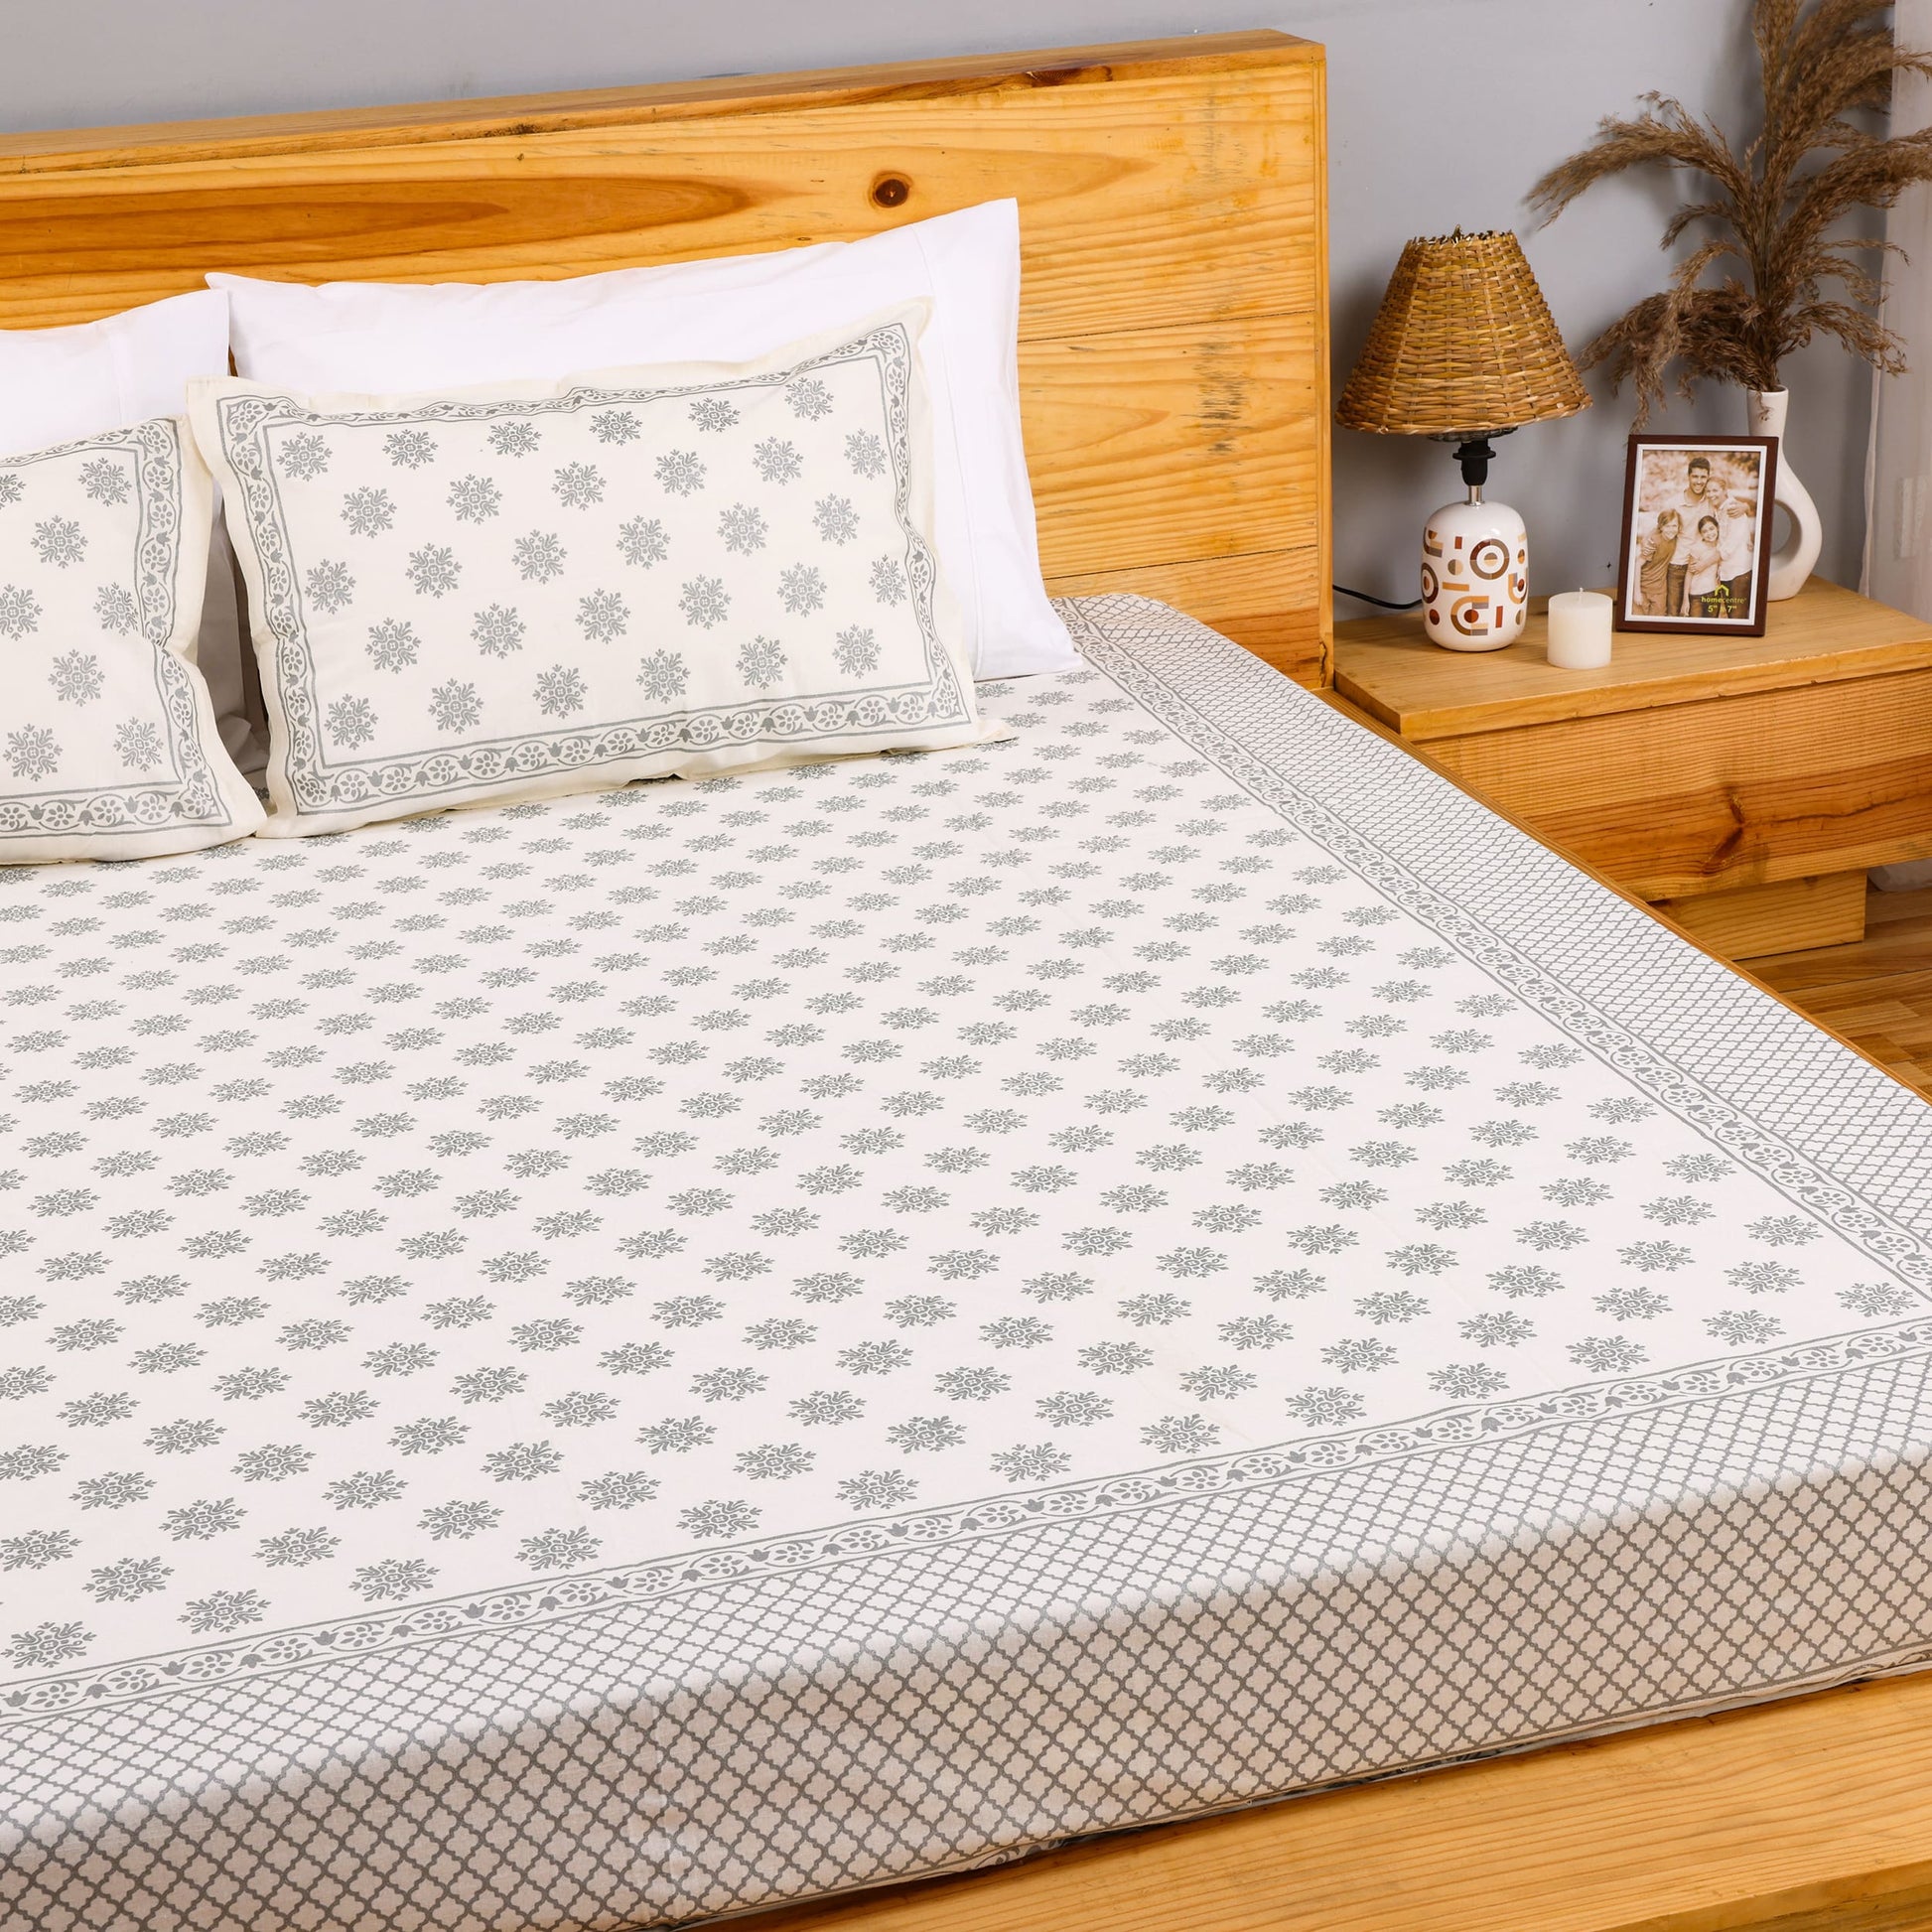 Pure Cotton Block Print Jaipuri Bedsheet - King Size 90*108 inches - Silver Snowflake